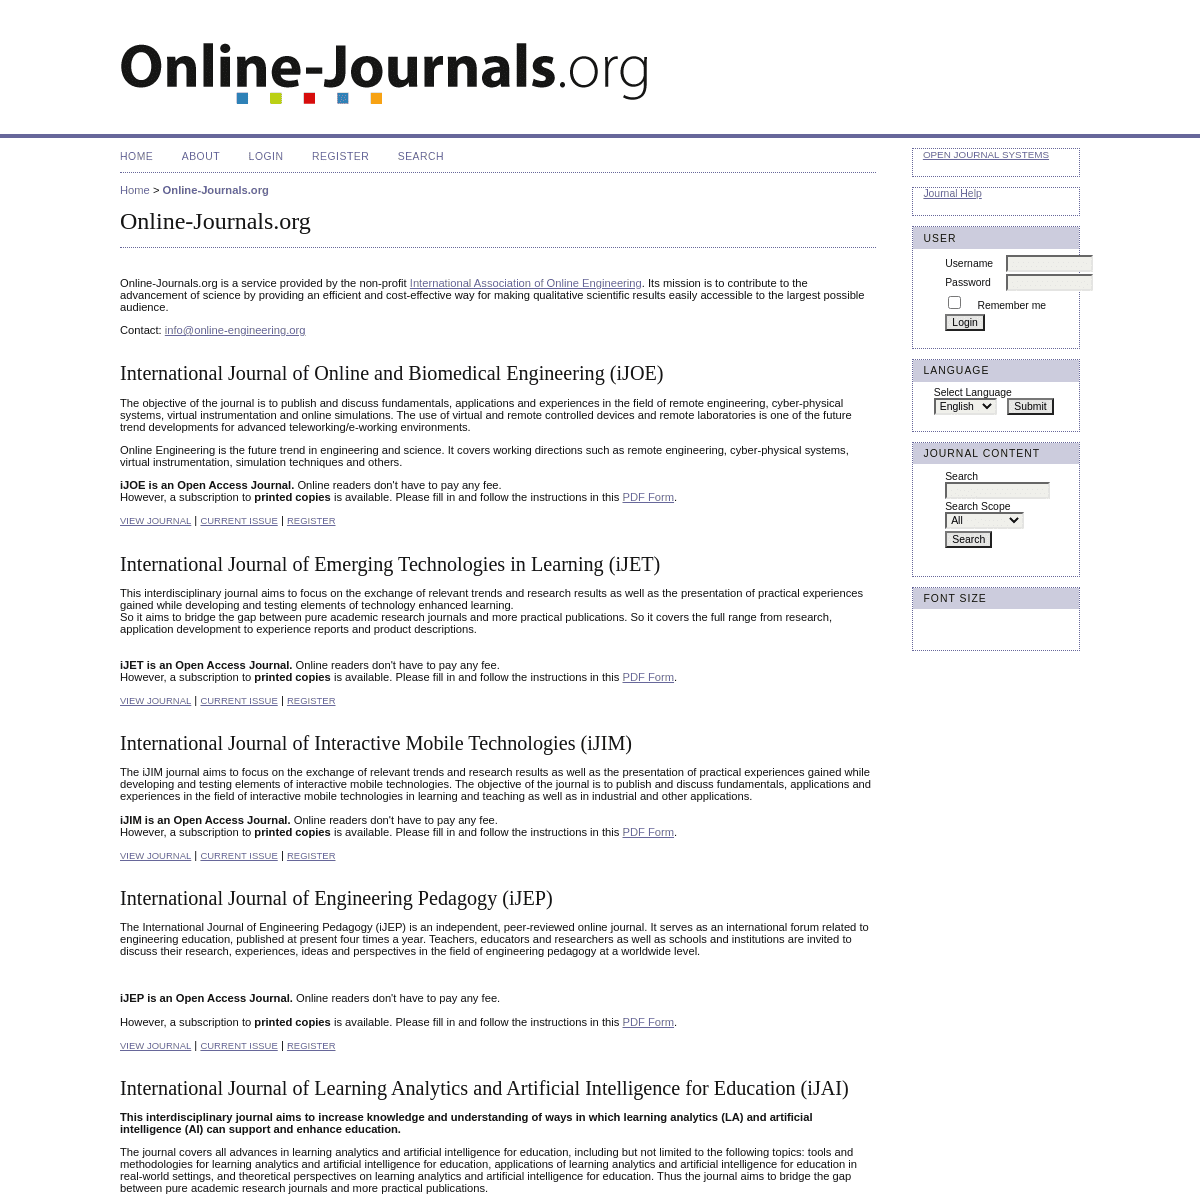 A complete backup of https://online-journals.org